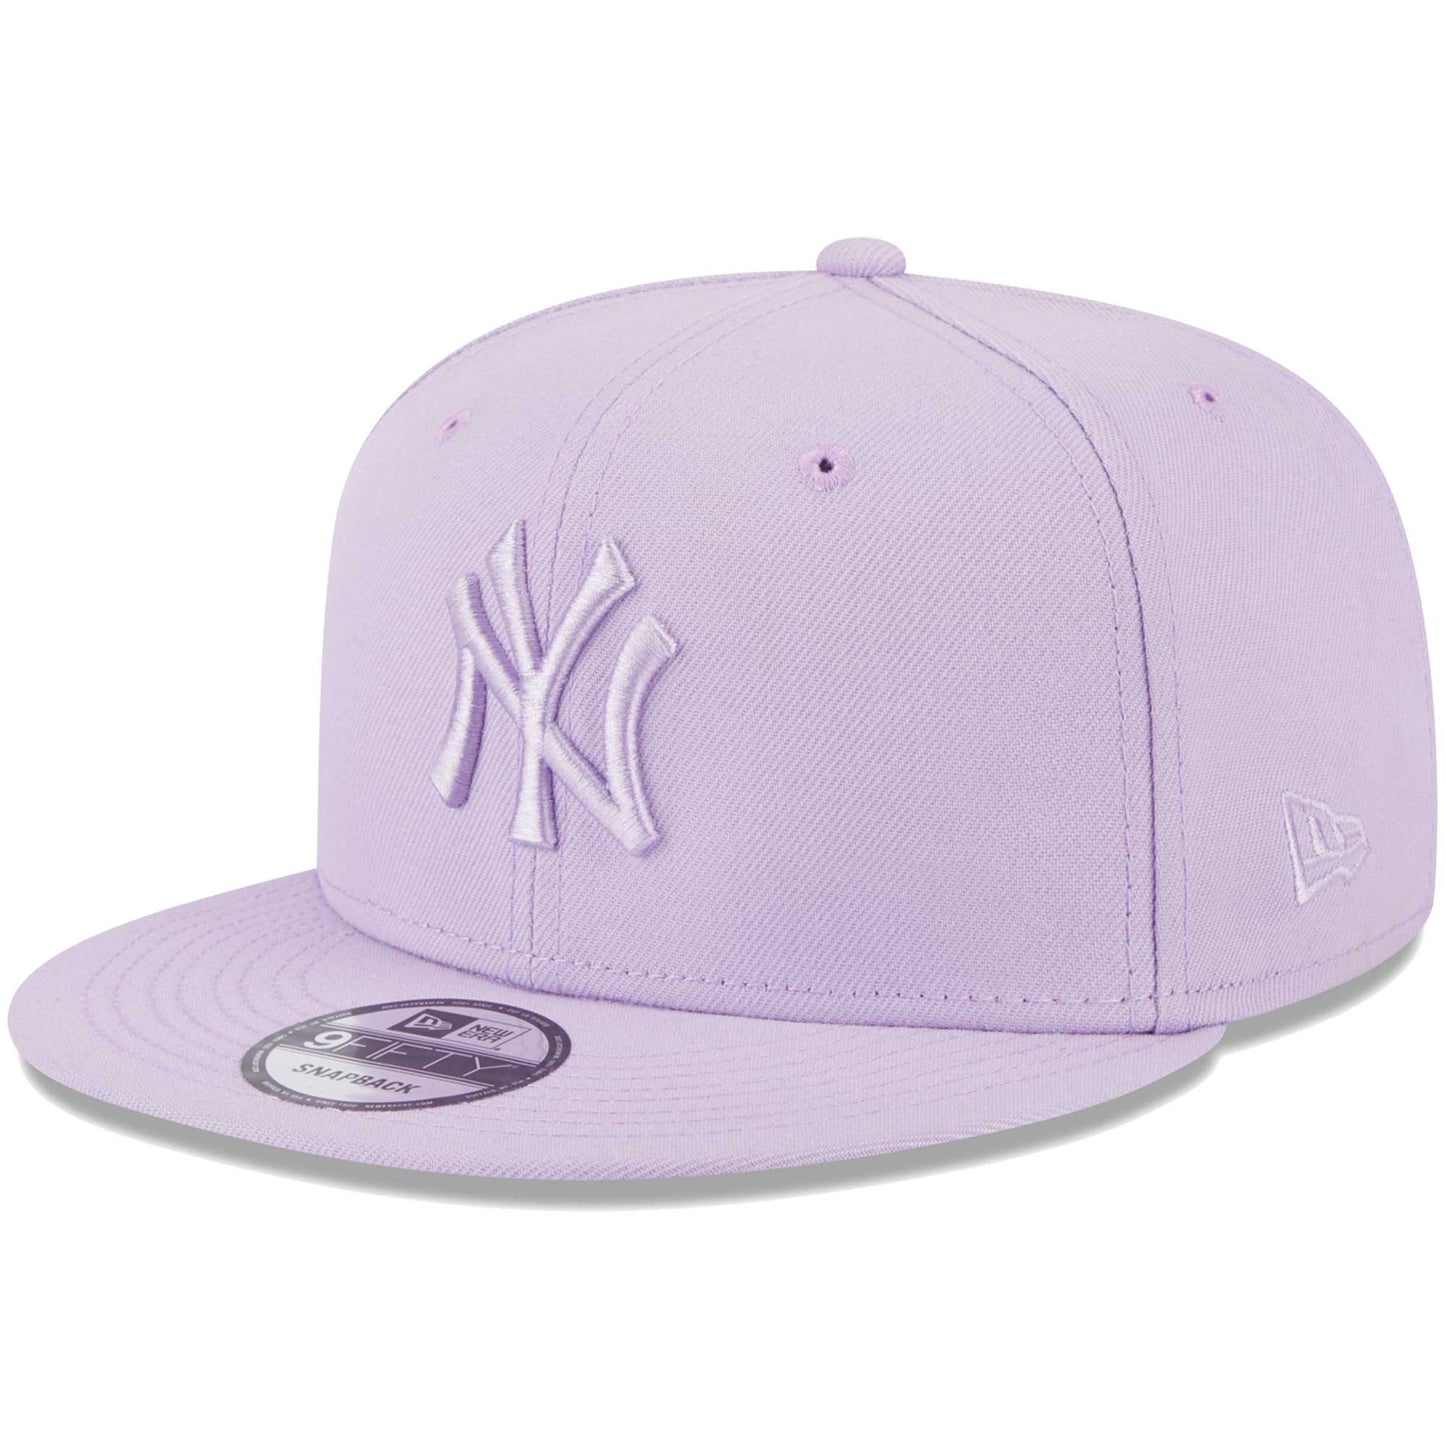 New York Yankees New Era Spring Color Basic 9FIFTY Snapback Hat - Lavender